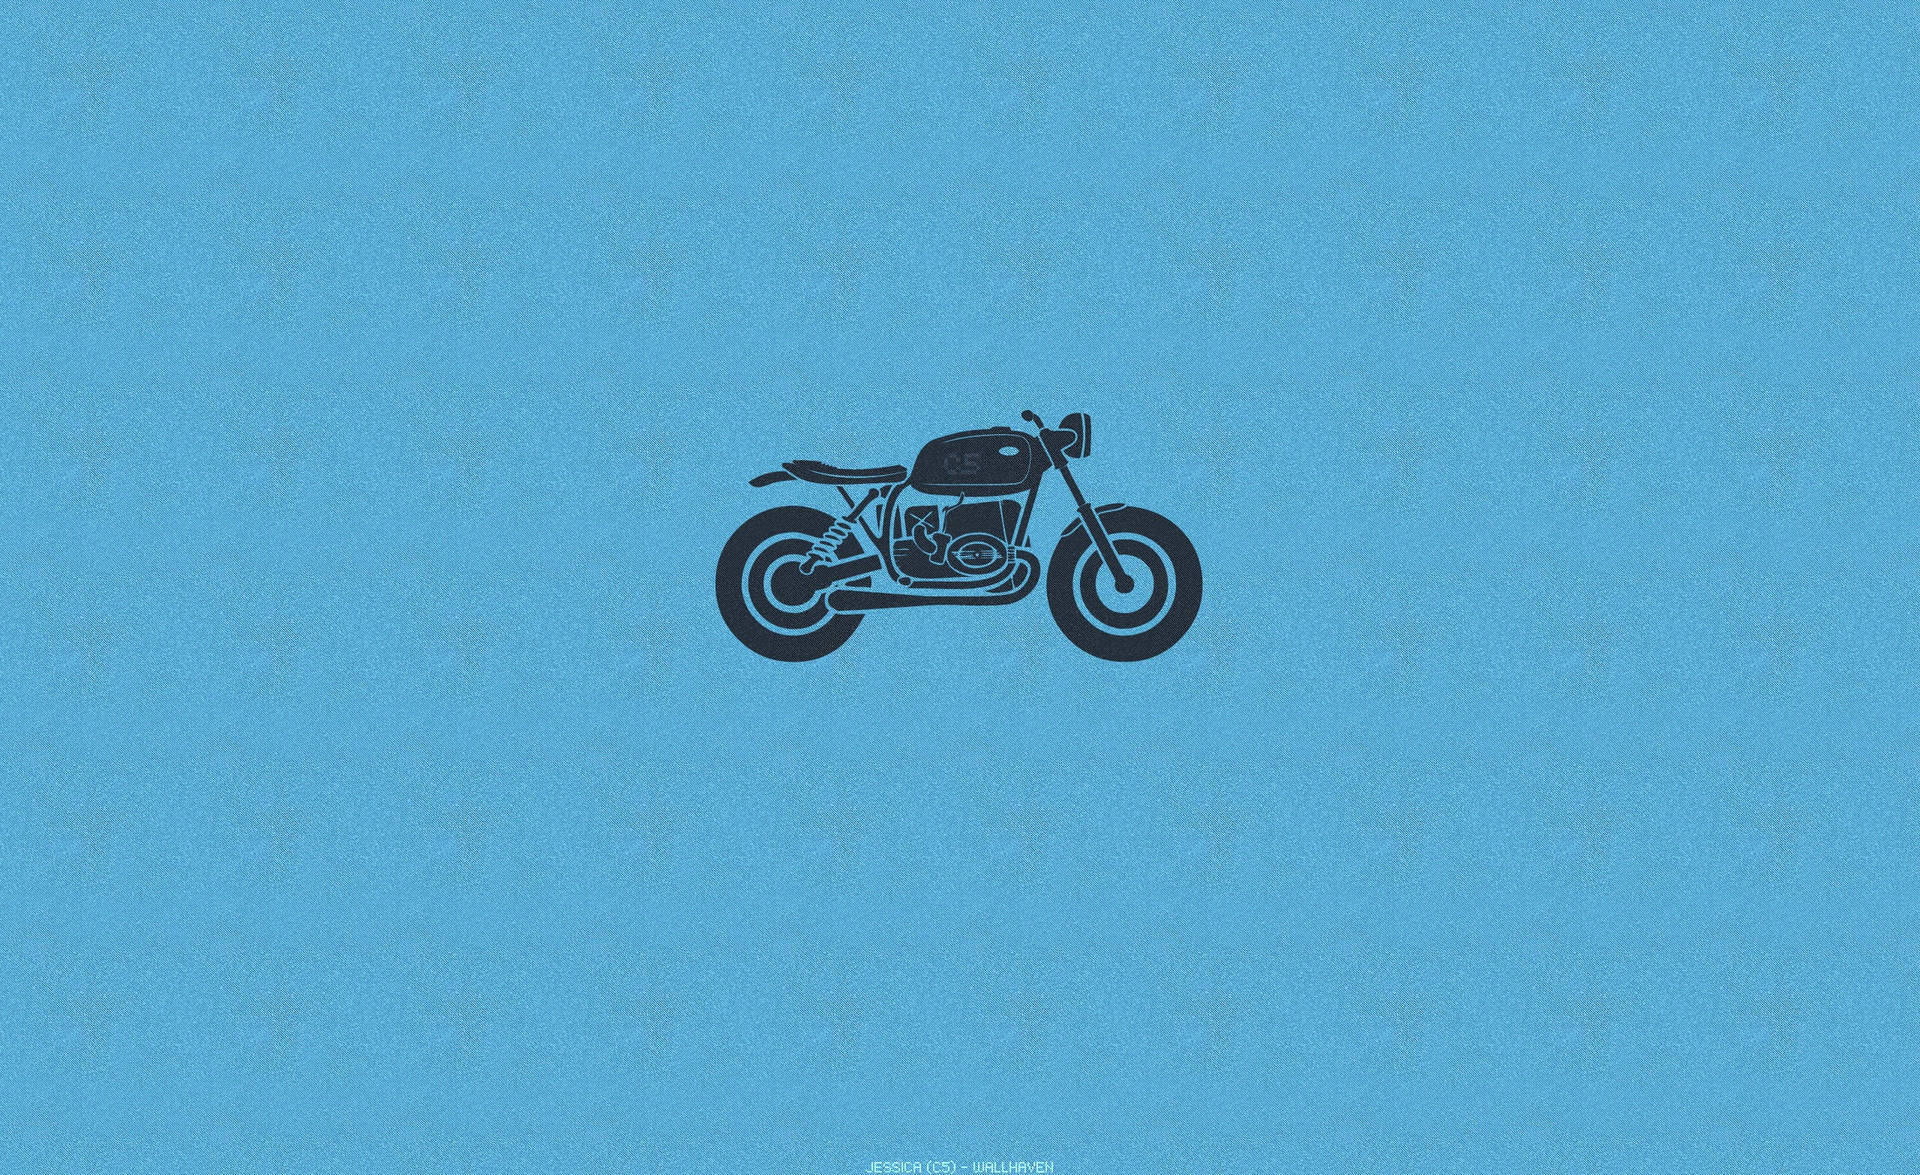 Bobber Motorcycle Minimalist Art